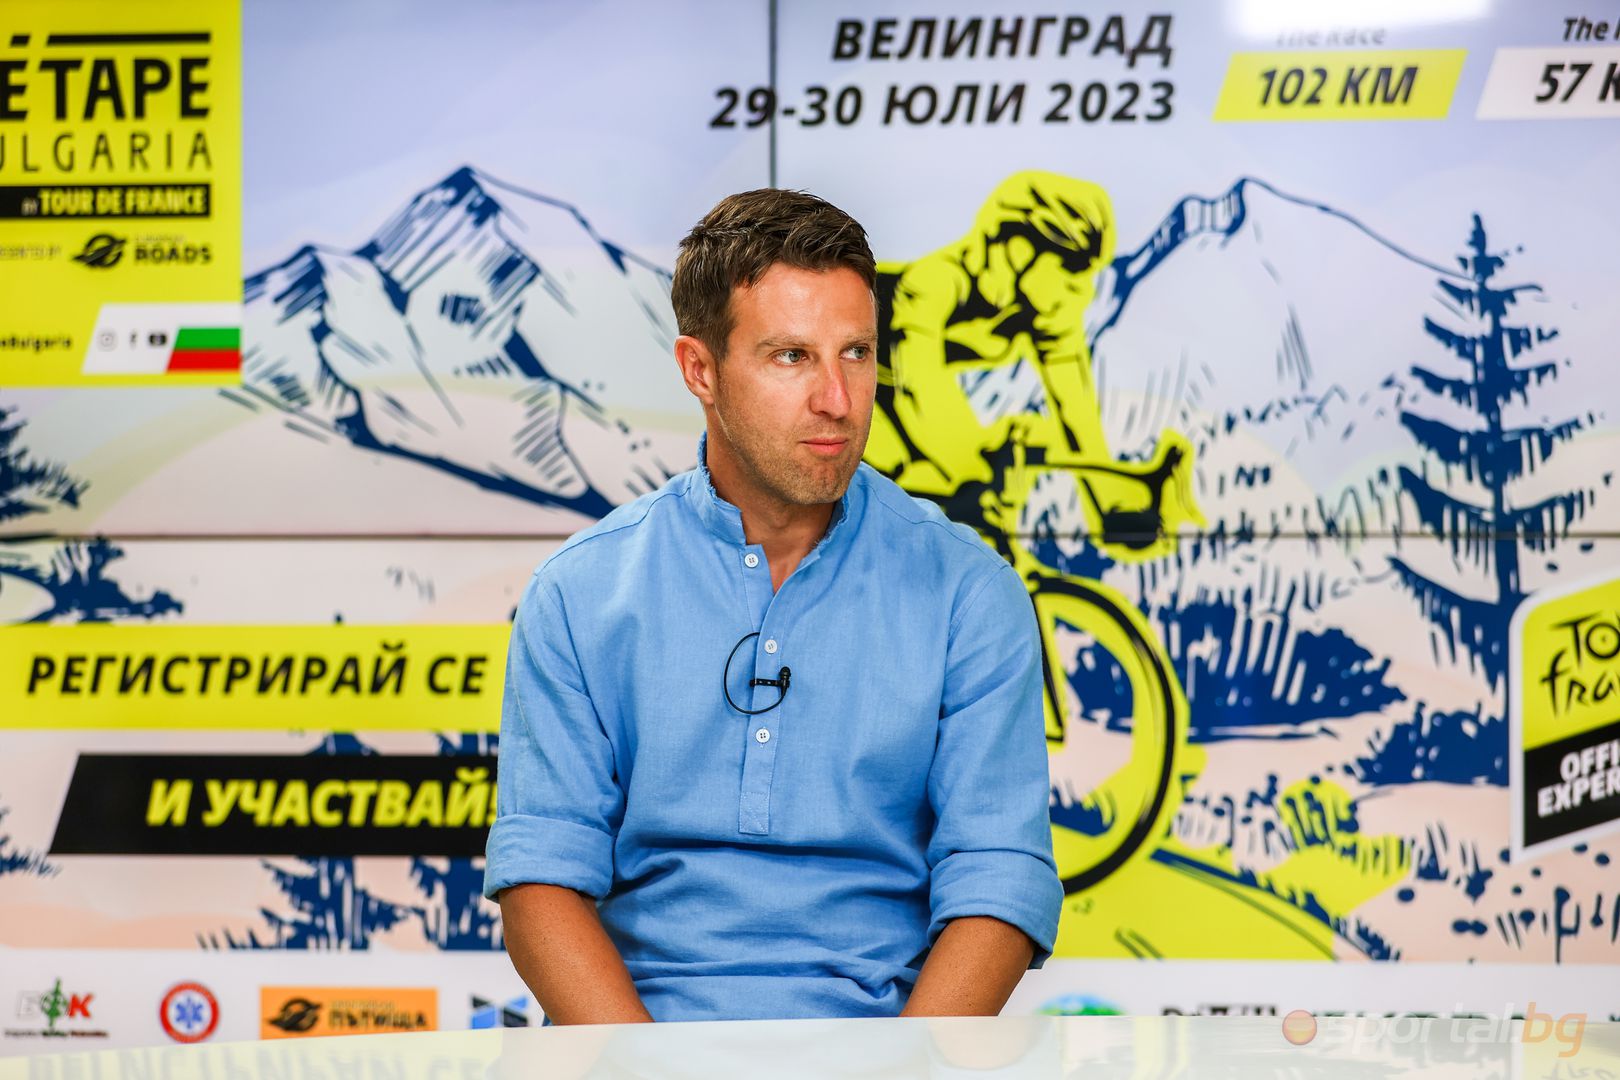 Интервюто на Sportal.bg за L' Etape Bulgaria by Tour de France